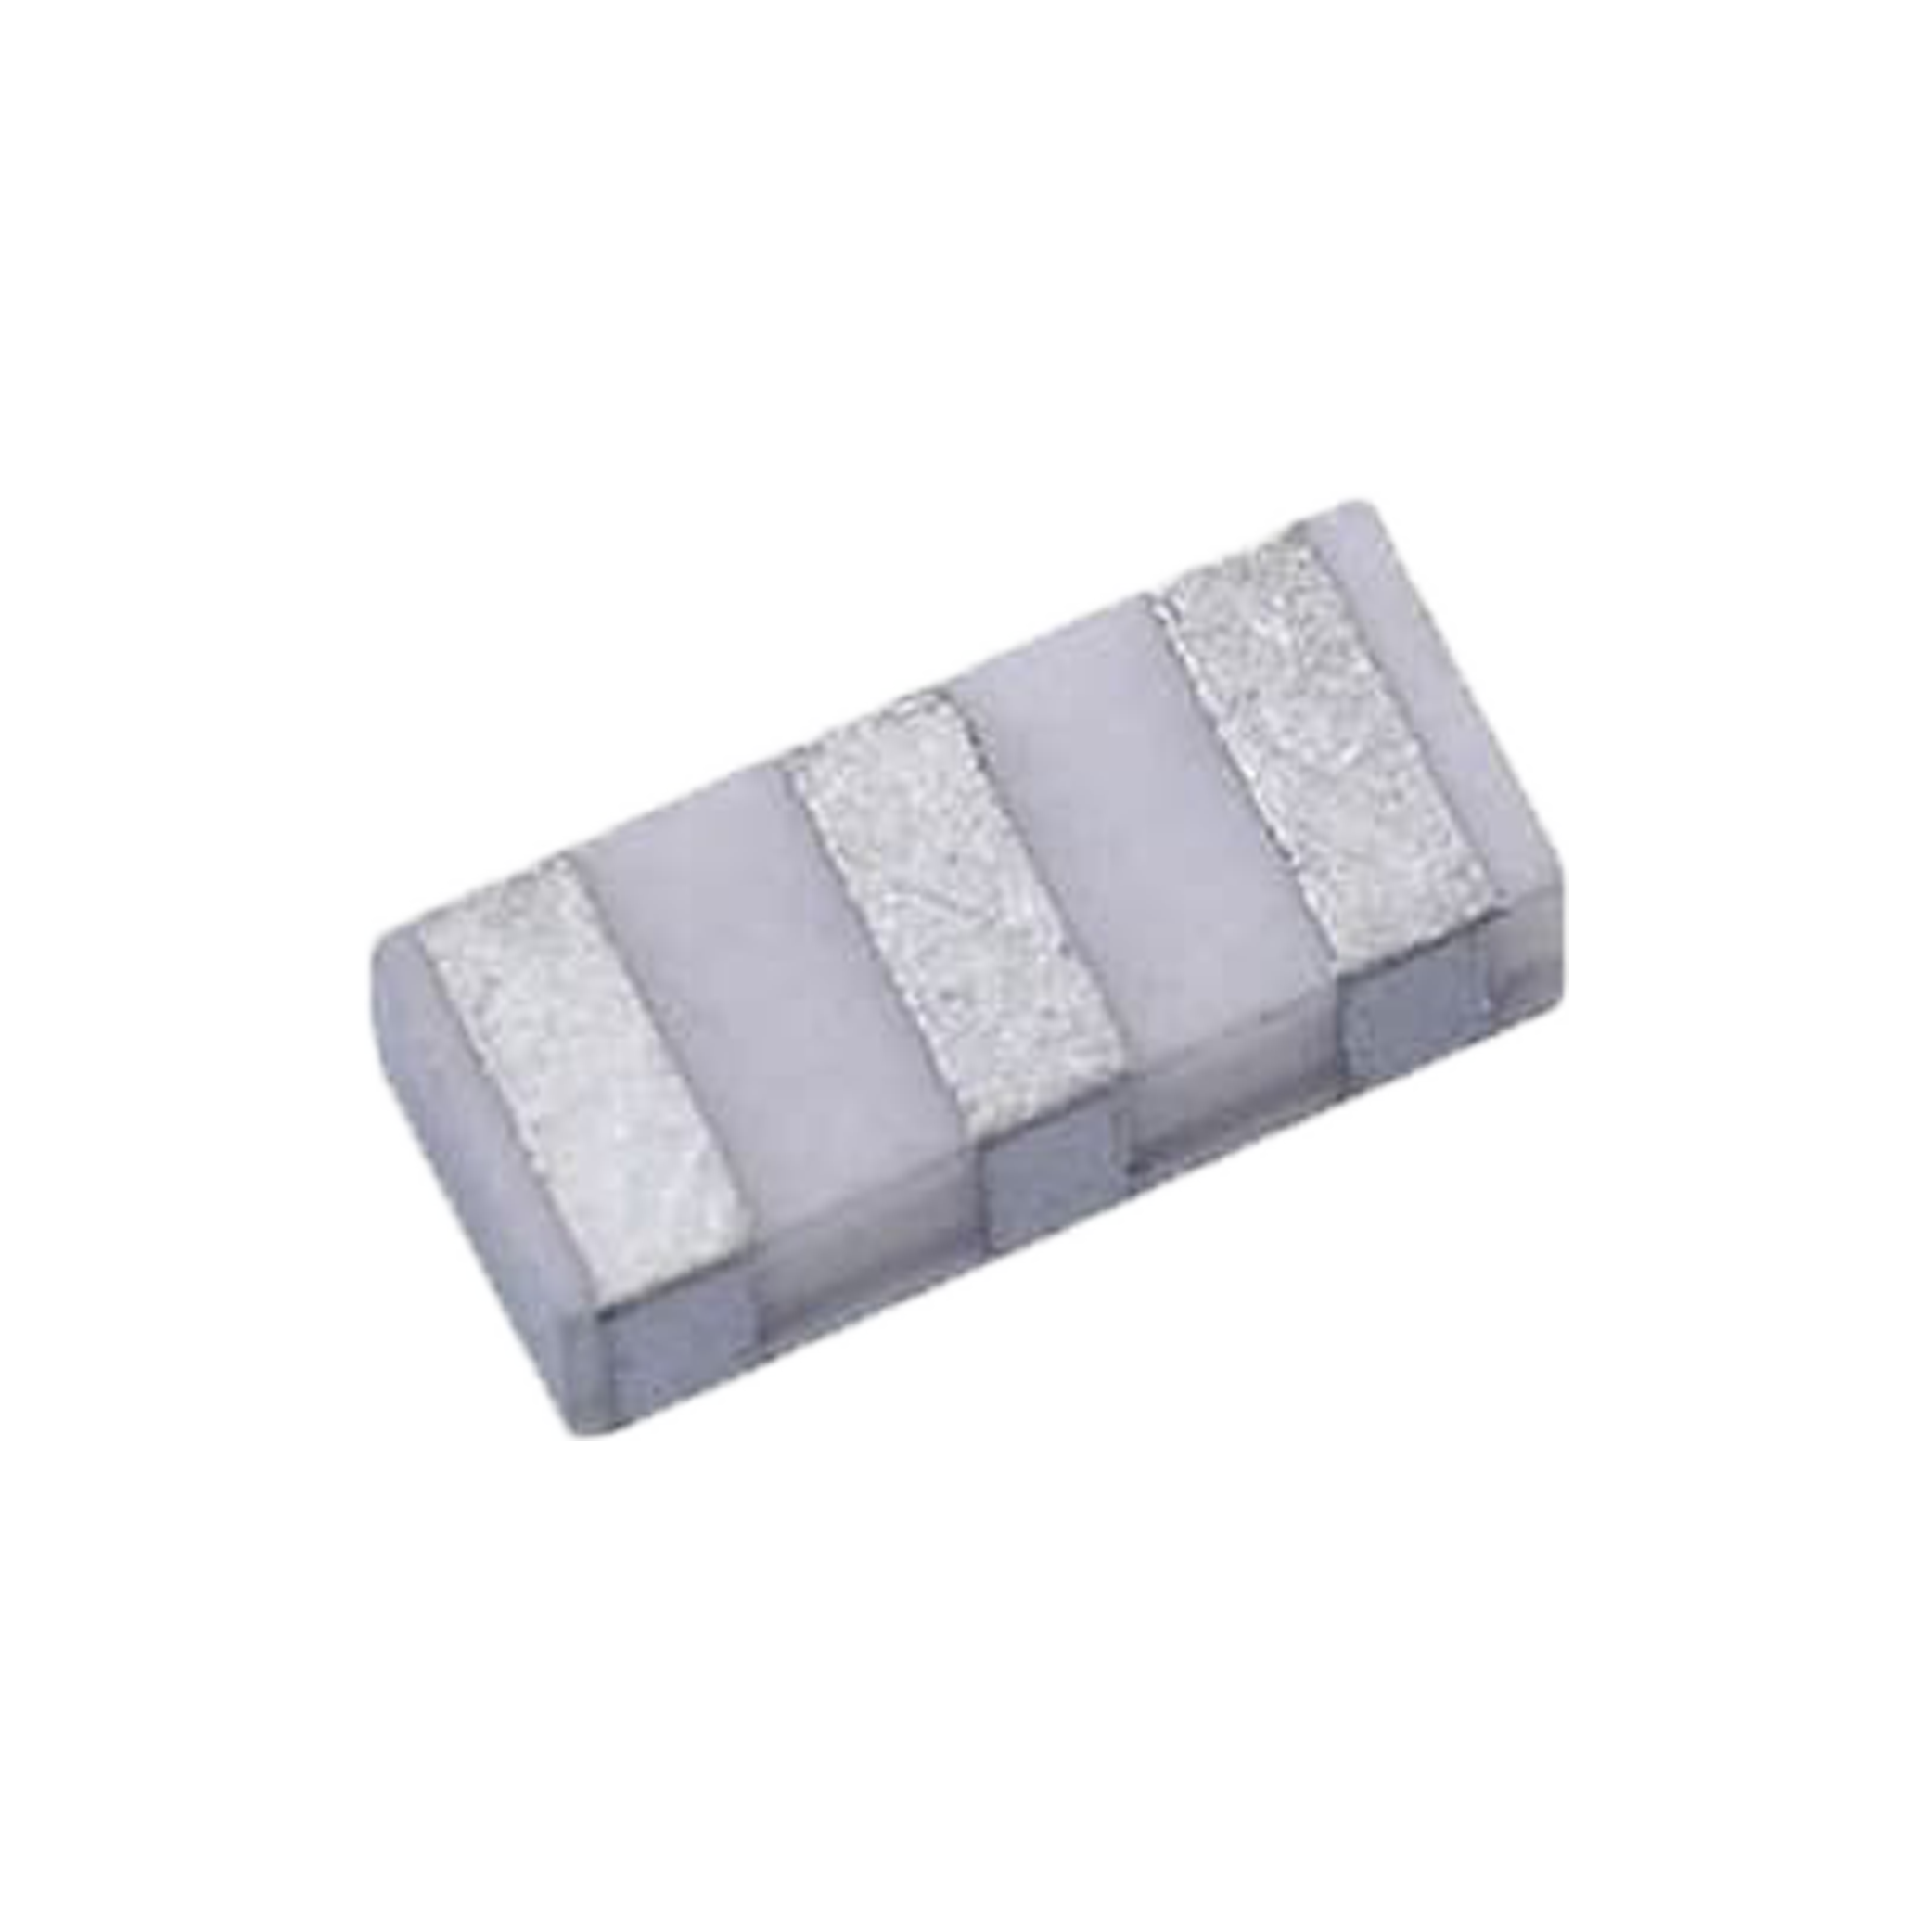 Product image for Ceramic Resonators